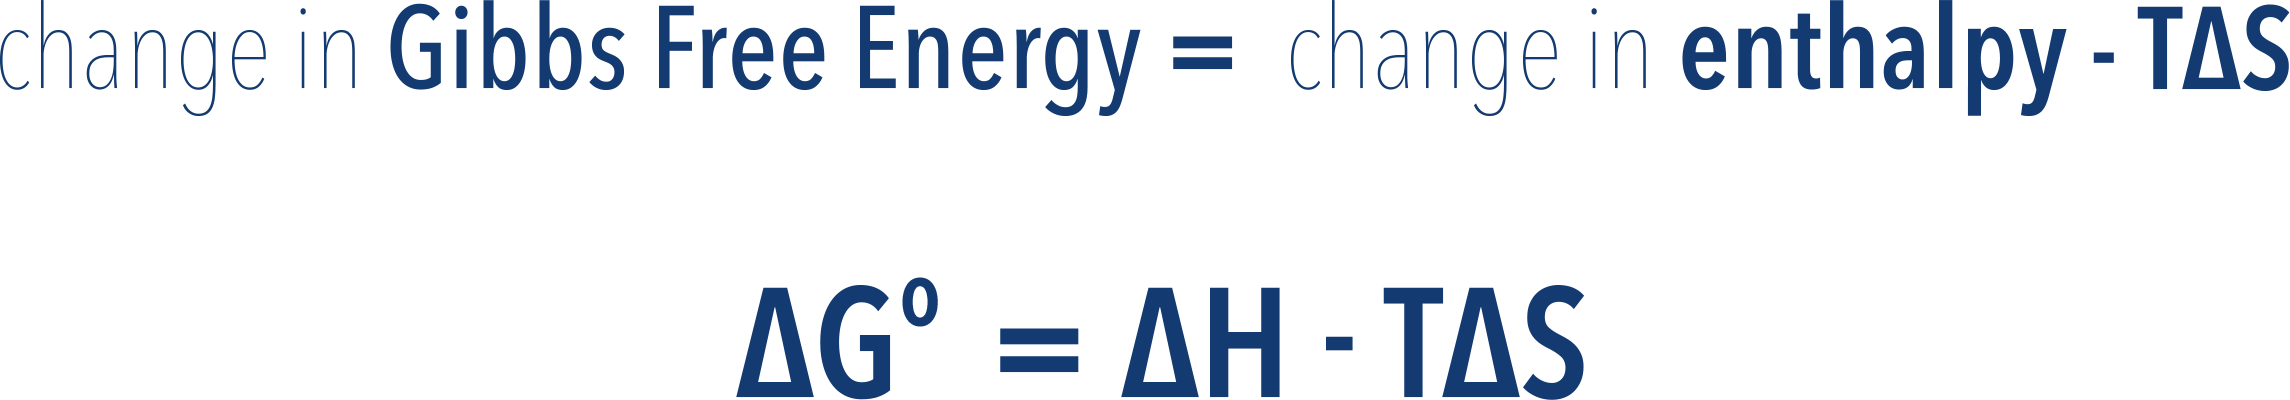 gibbs free energy change equation a-level chemistry